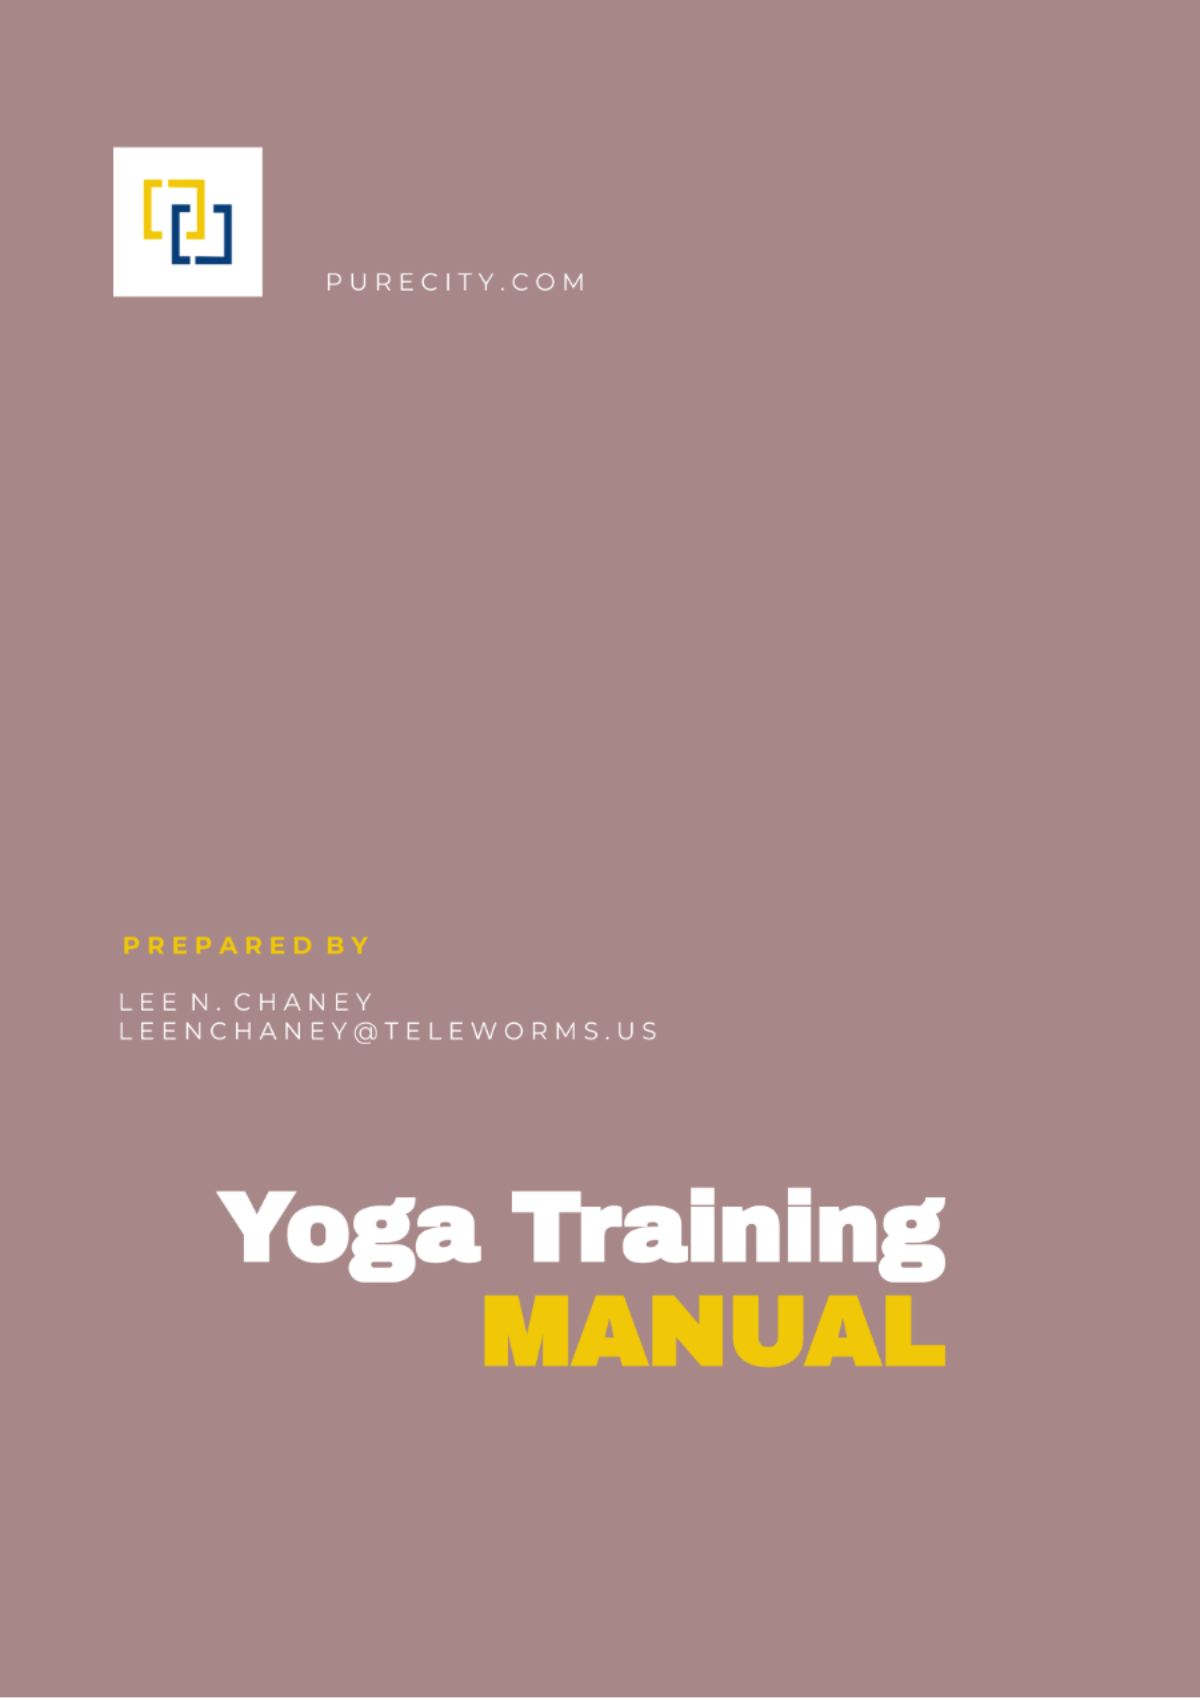 Yoga Training Manual Template